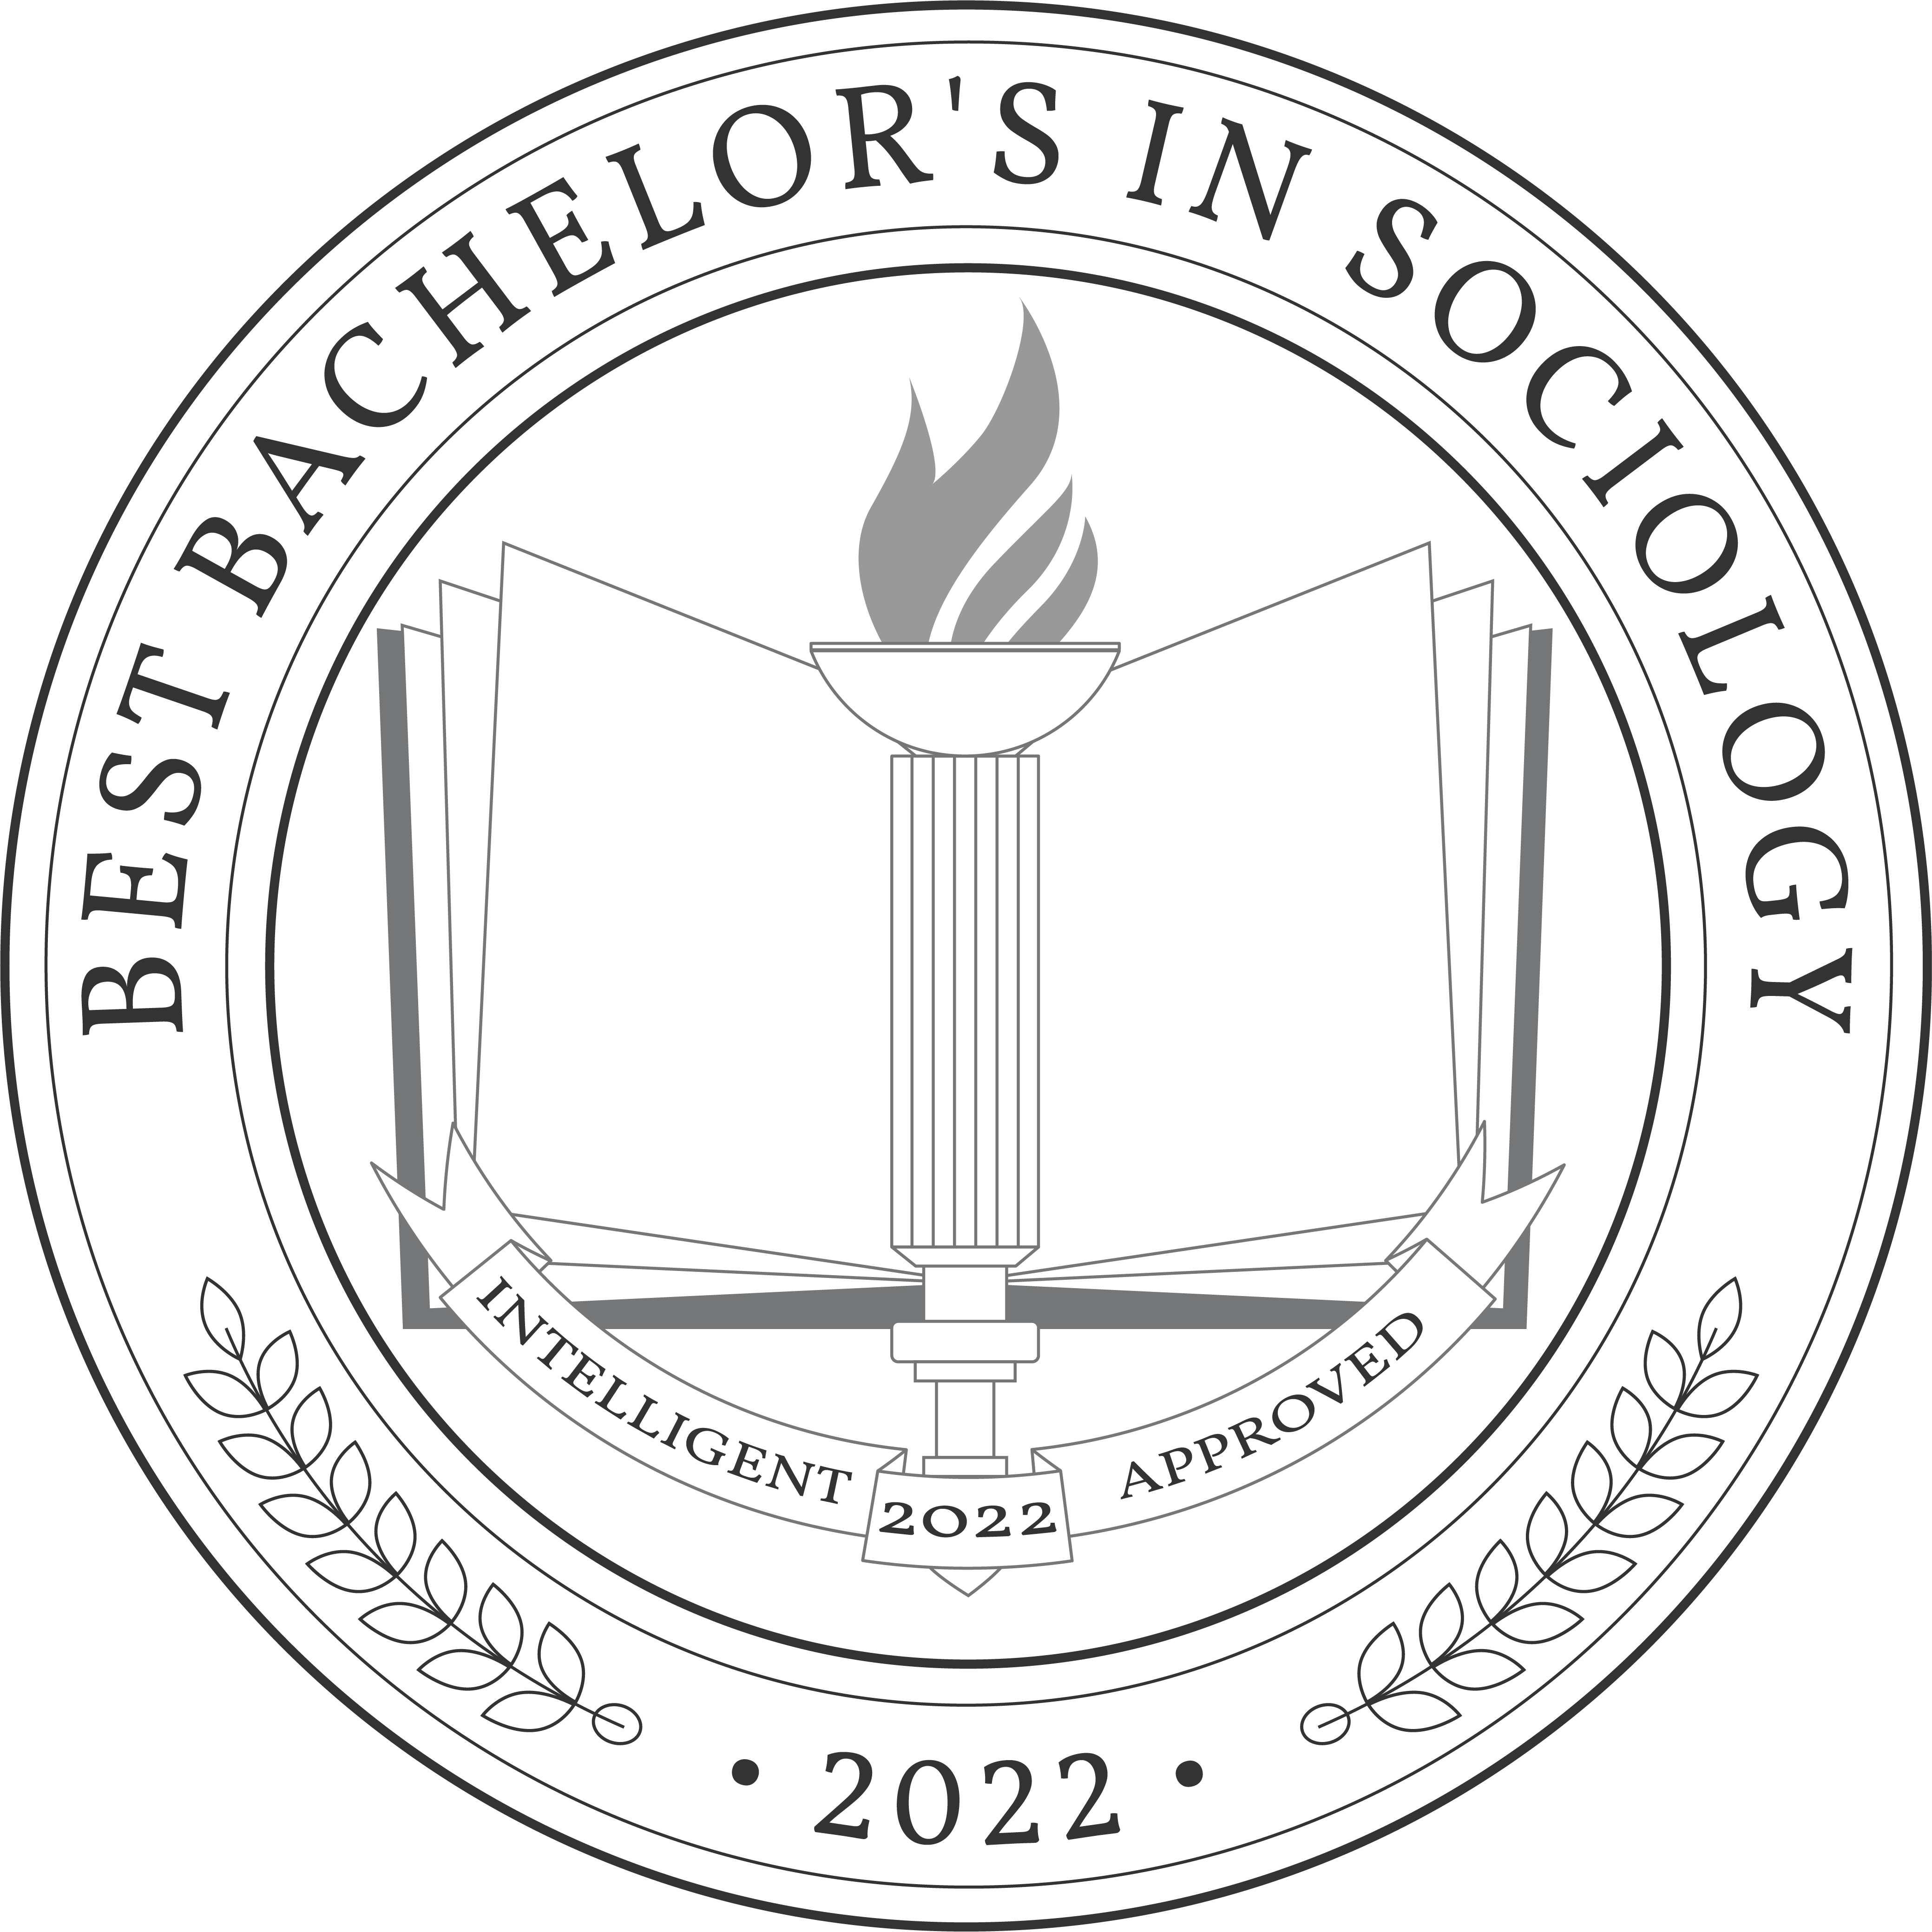 Best Bachelor's in Sociology Badge